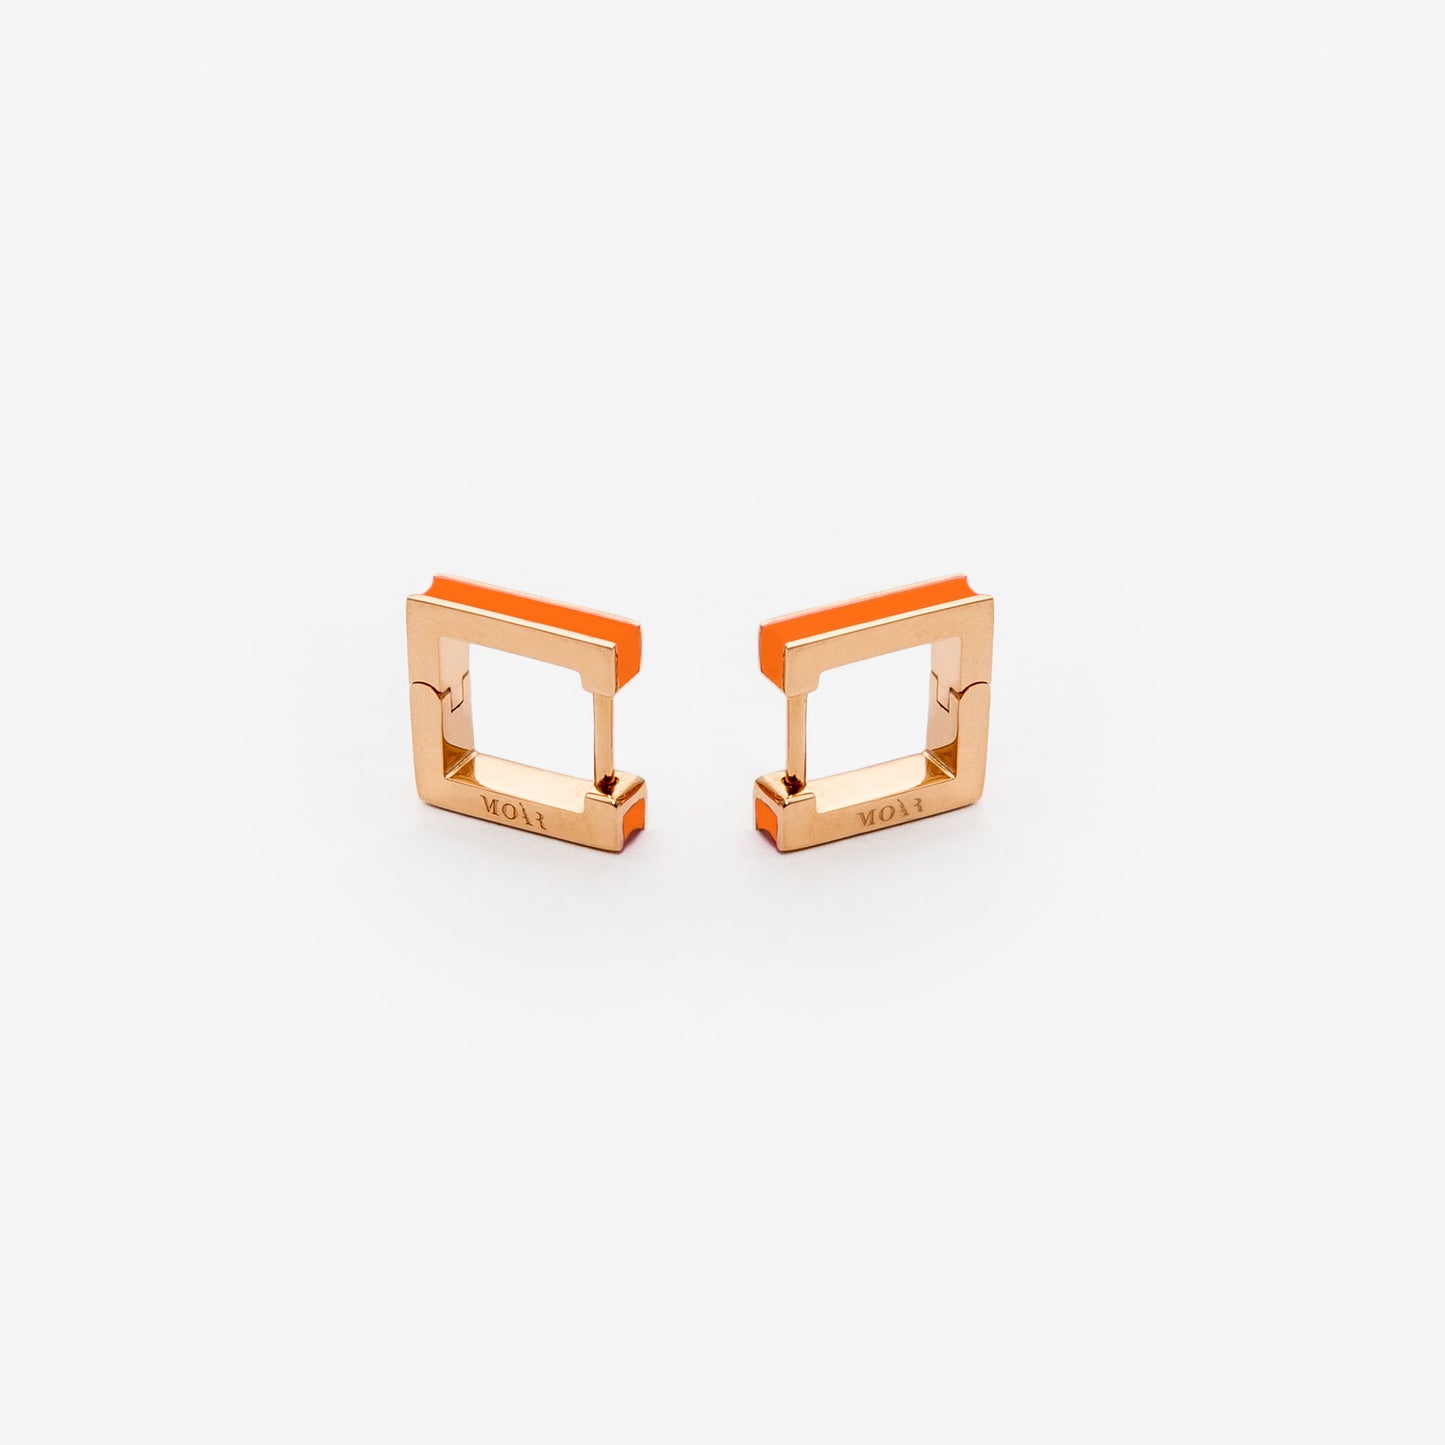 Square orange earrings